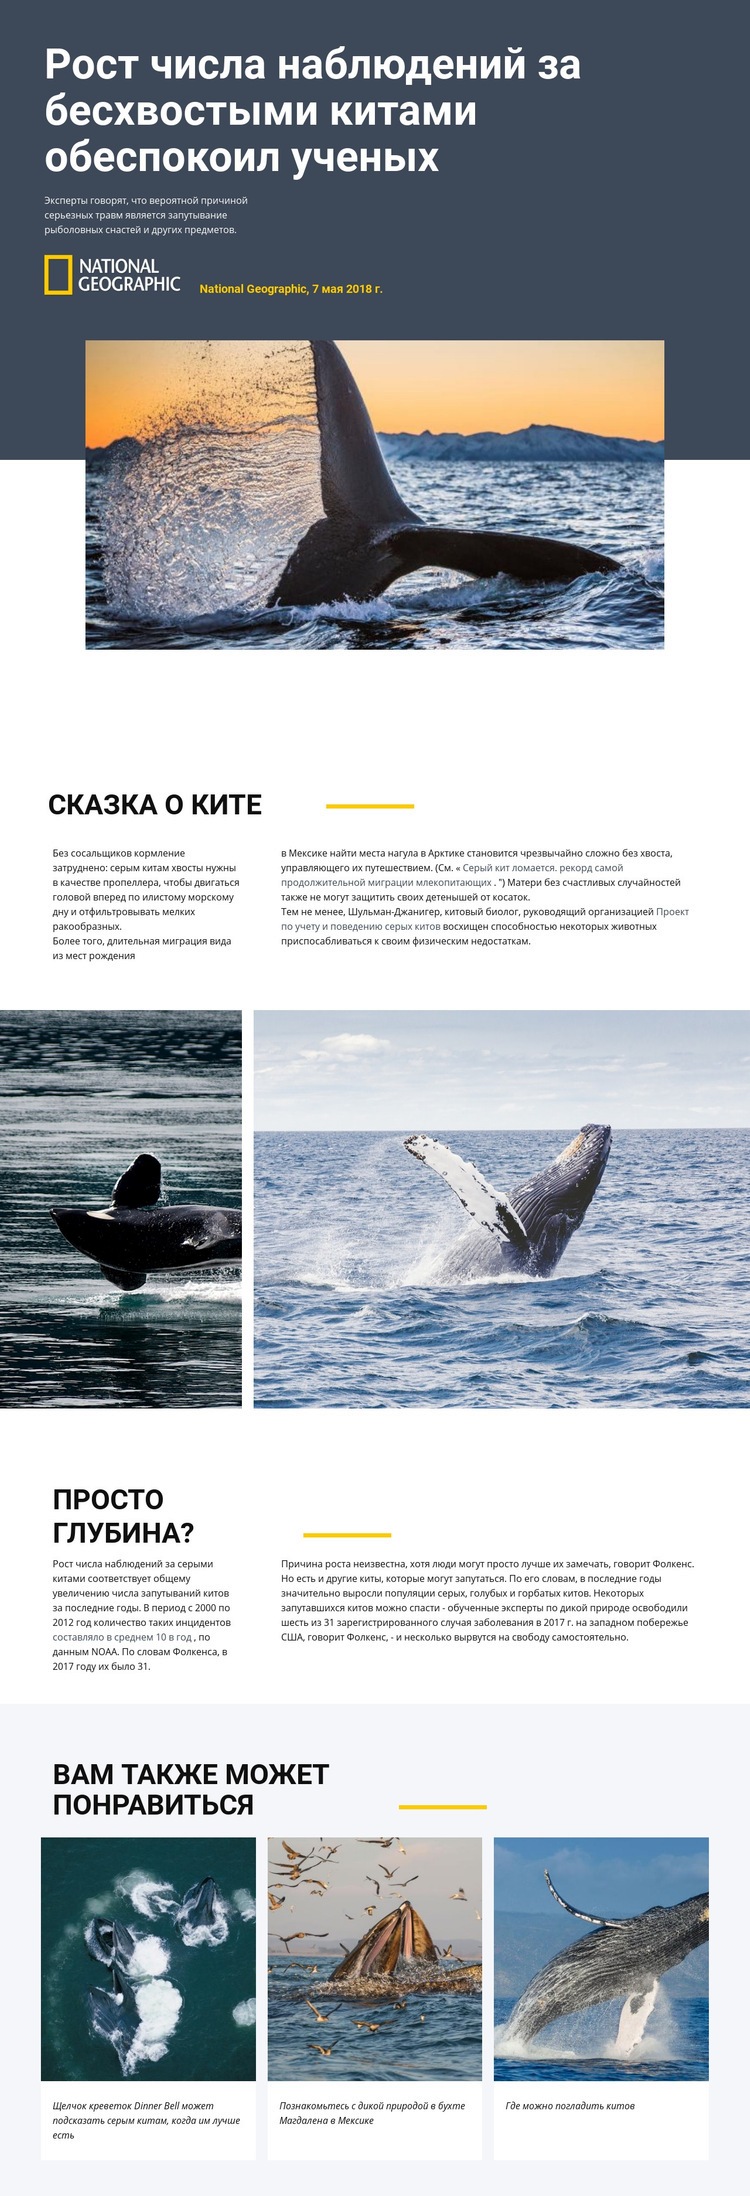 Центр наблюдения за китами Мокап веб-сайта